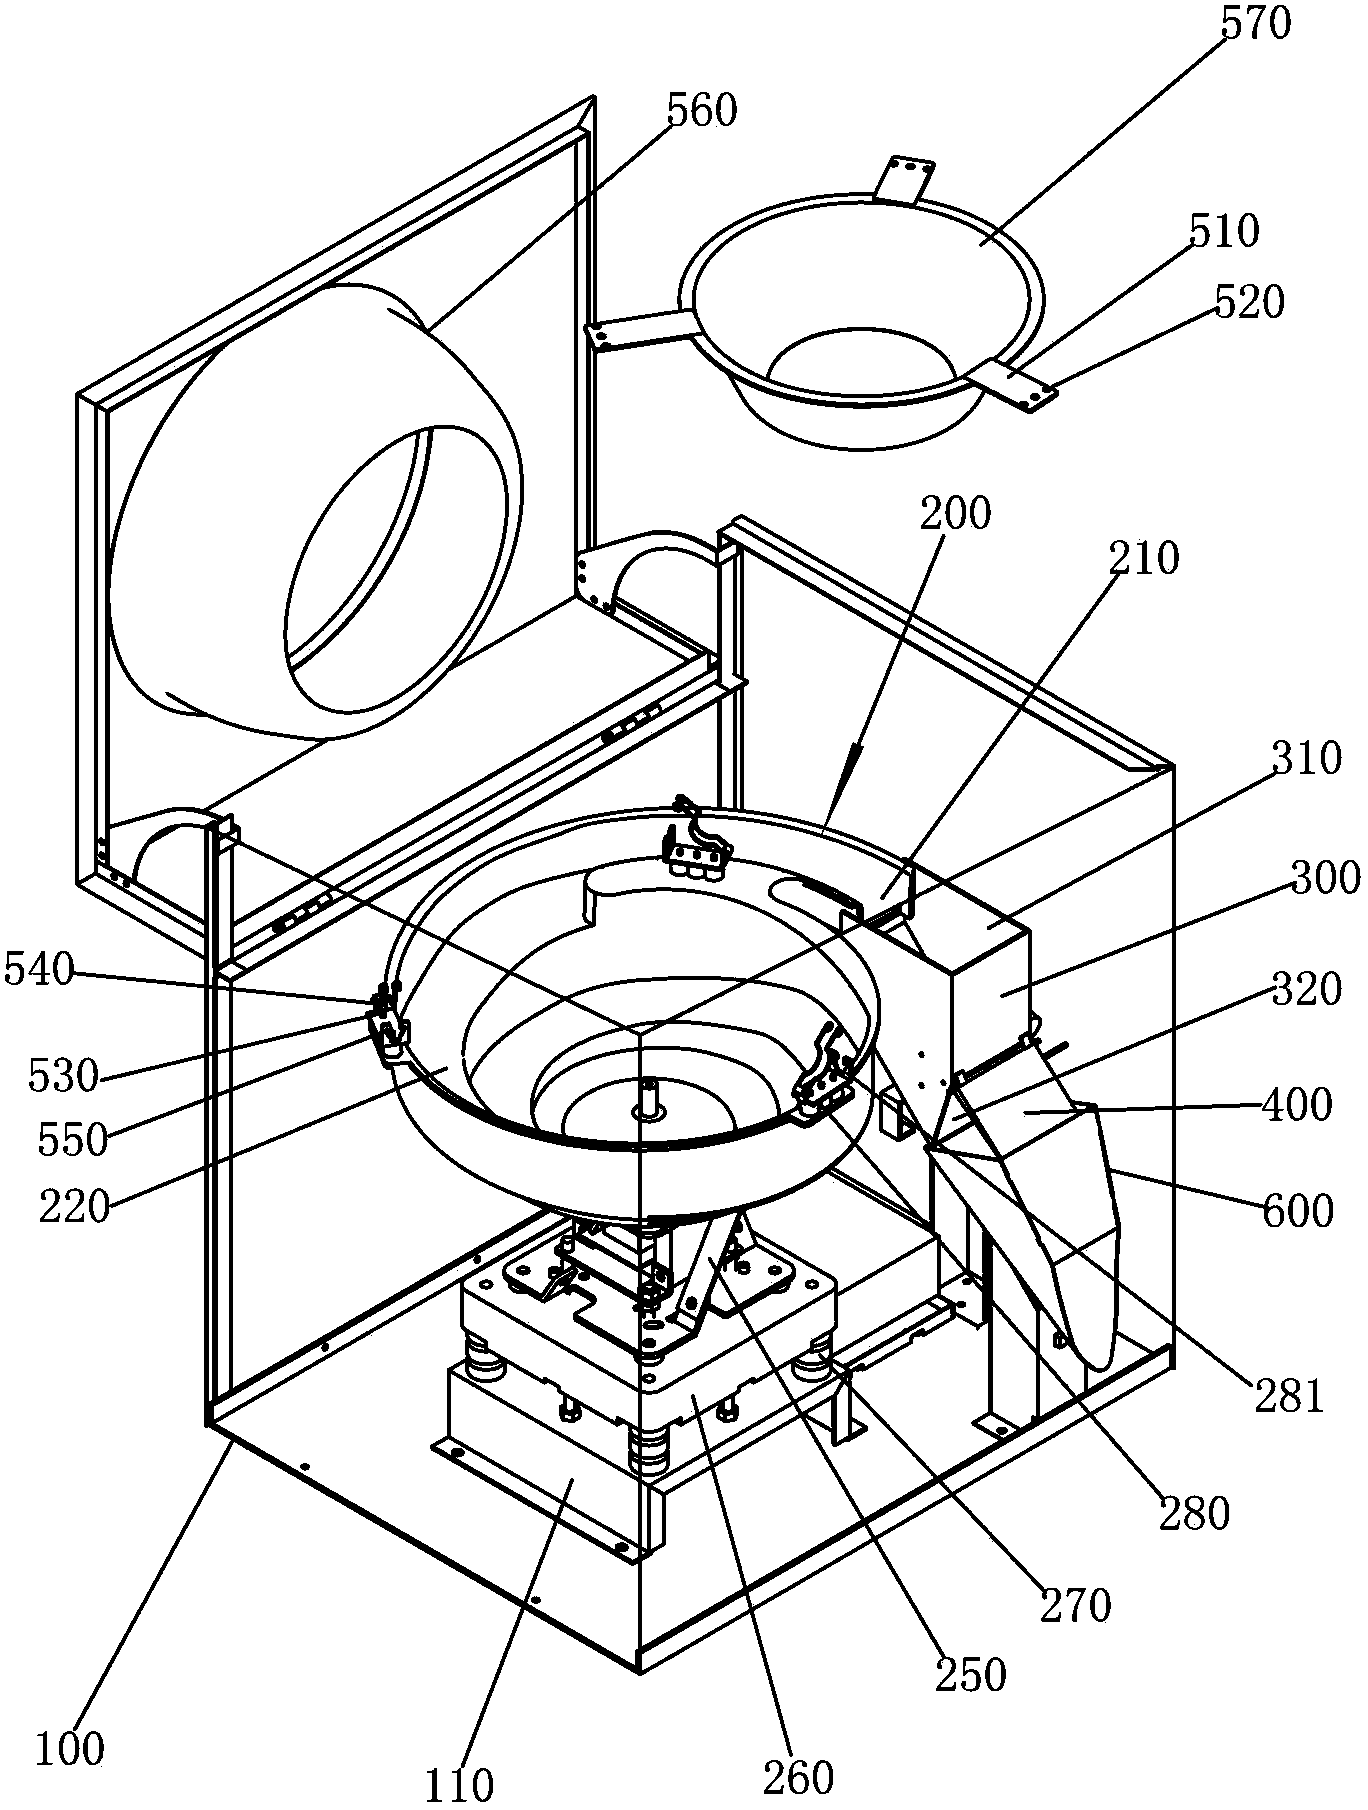 Material sub-packaging machine